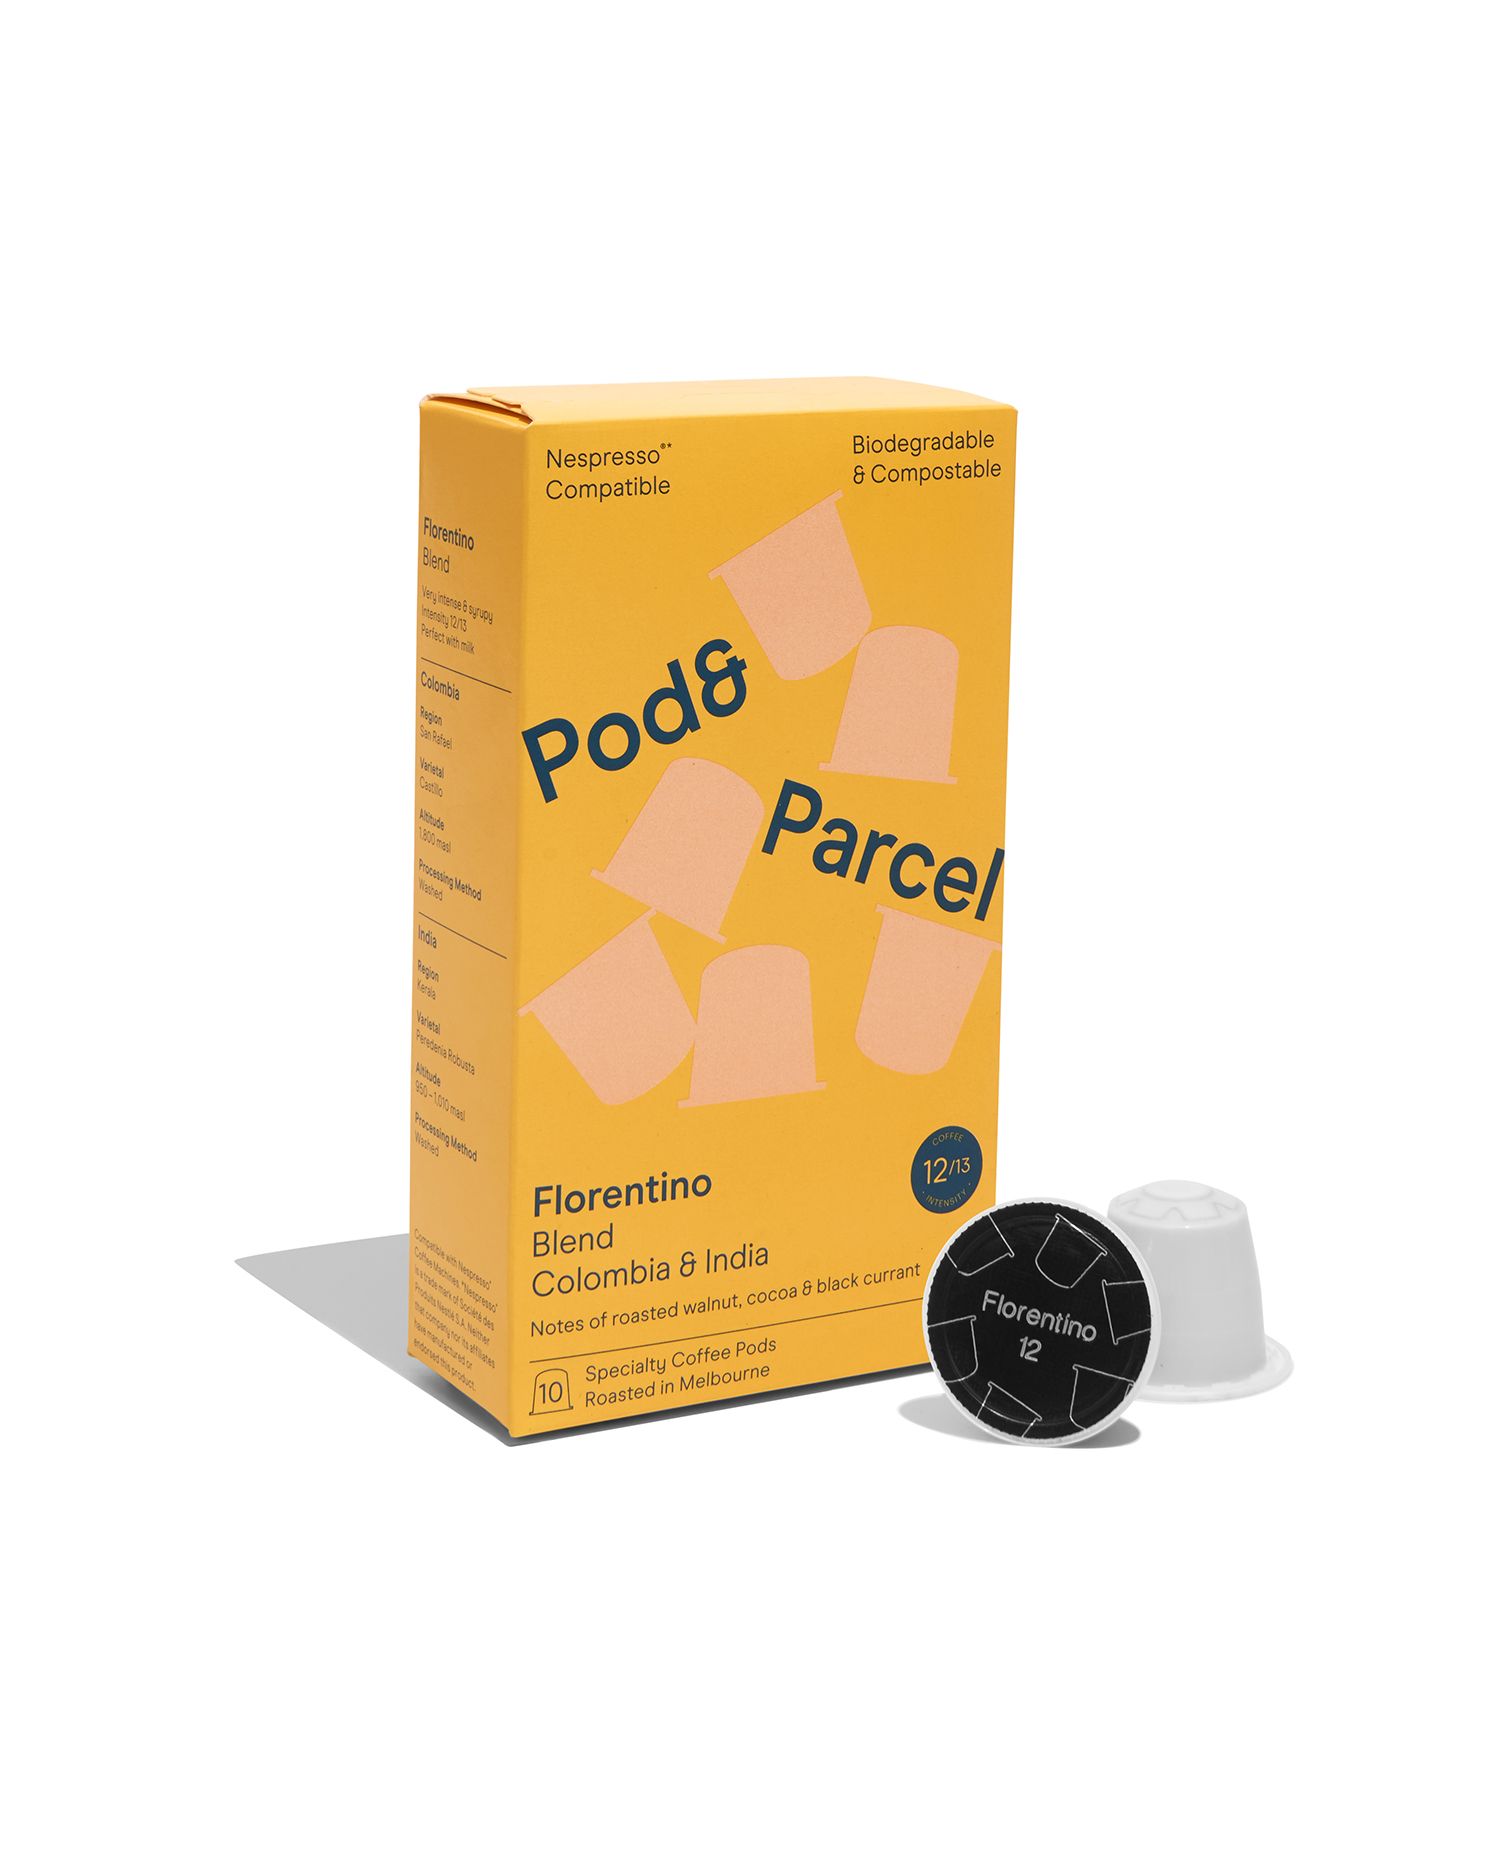 Florentino - Biodegradable & Compostable Coffee Pods | Pod & Parcel